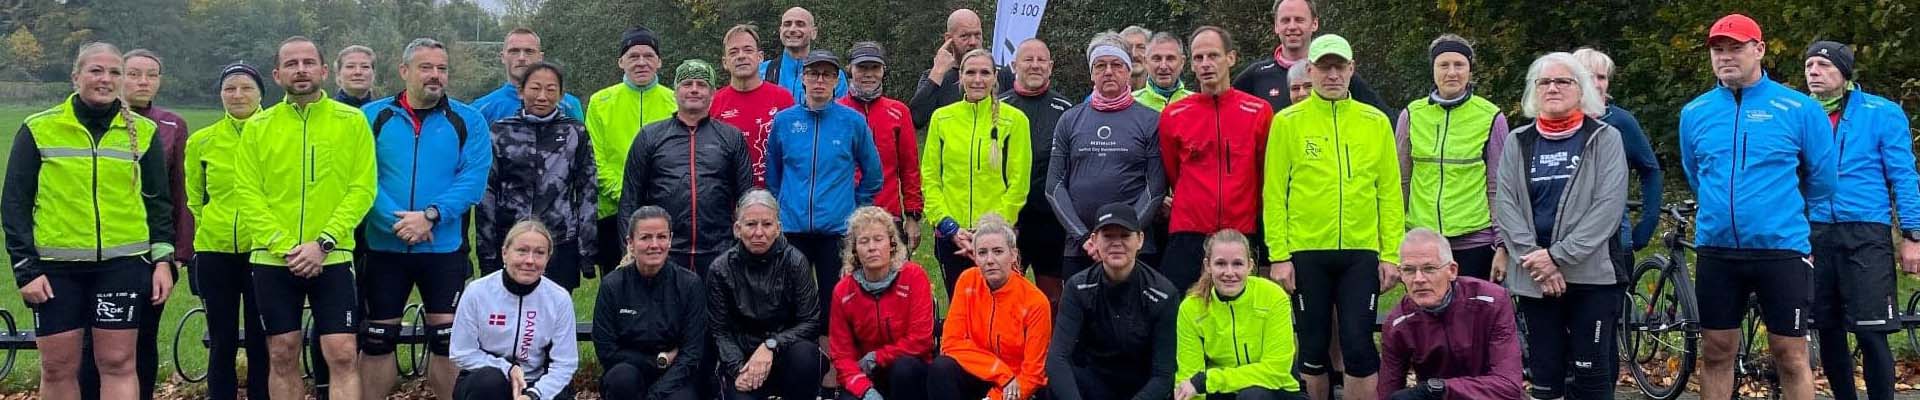 Dansk Halvmarathonklub - Generalforsamlingsløb23